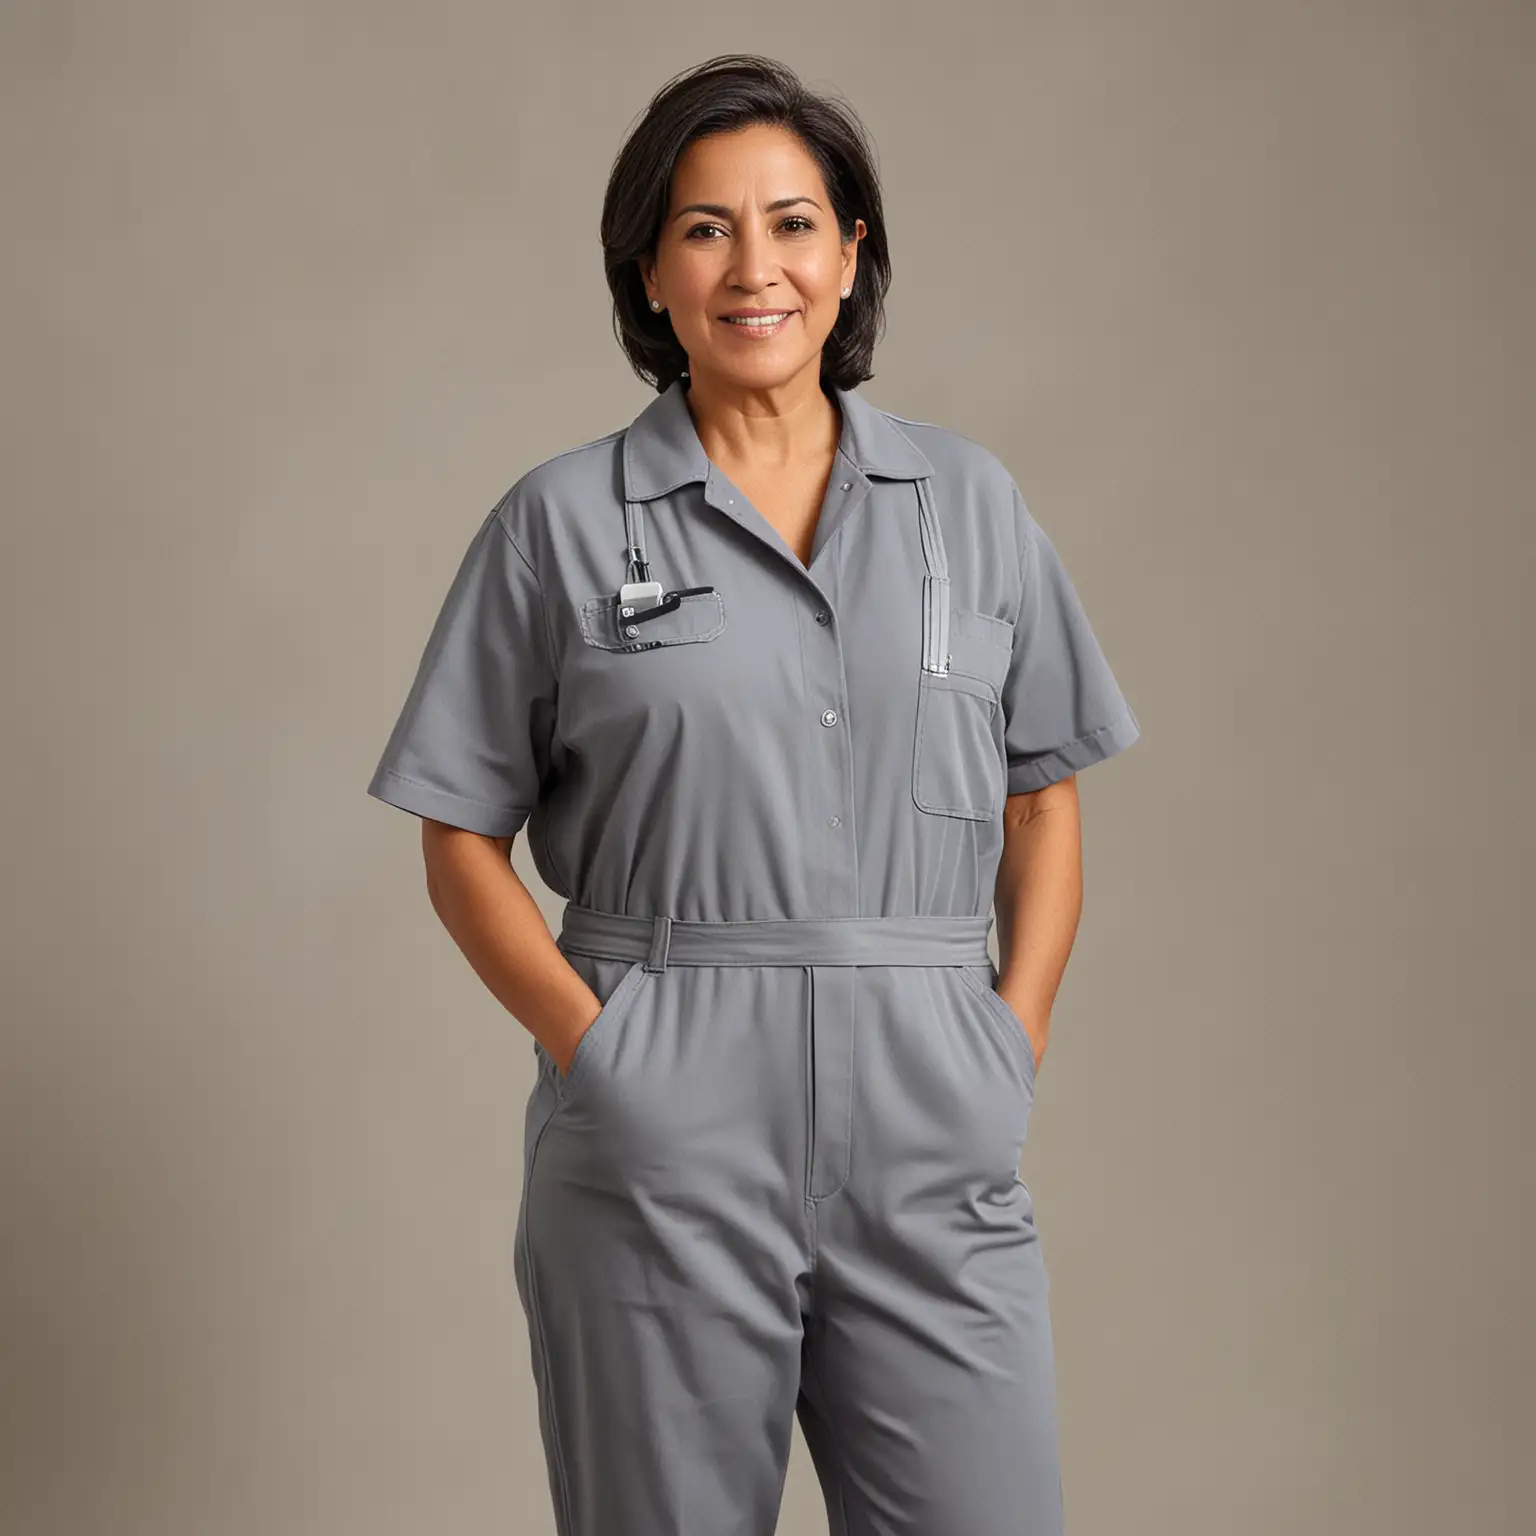 Hispanic Female Janitor in Grey Jumpsuit